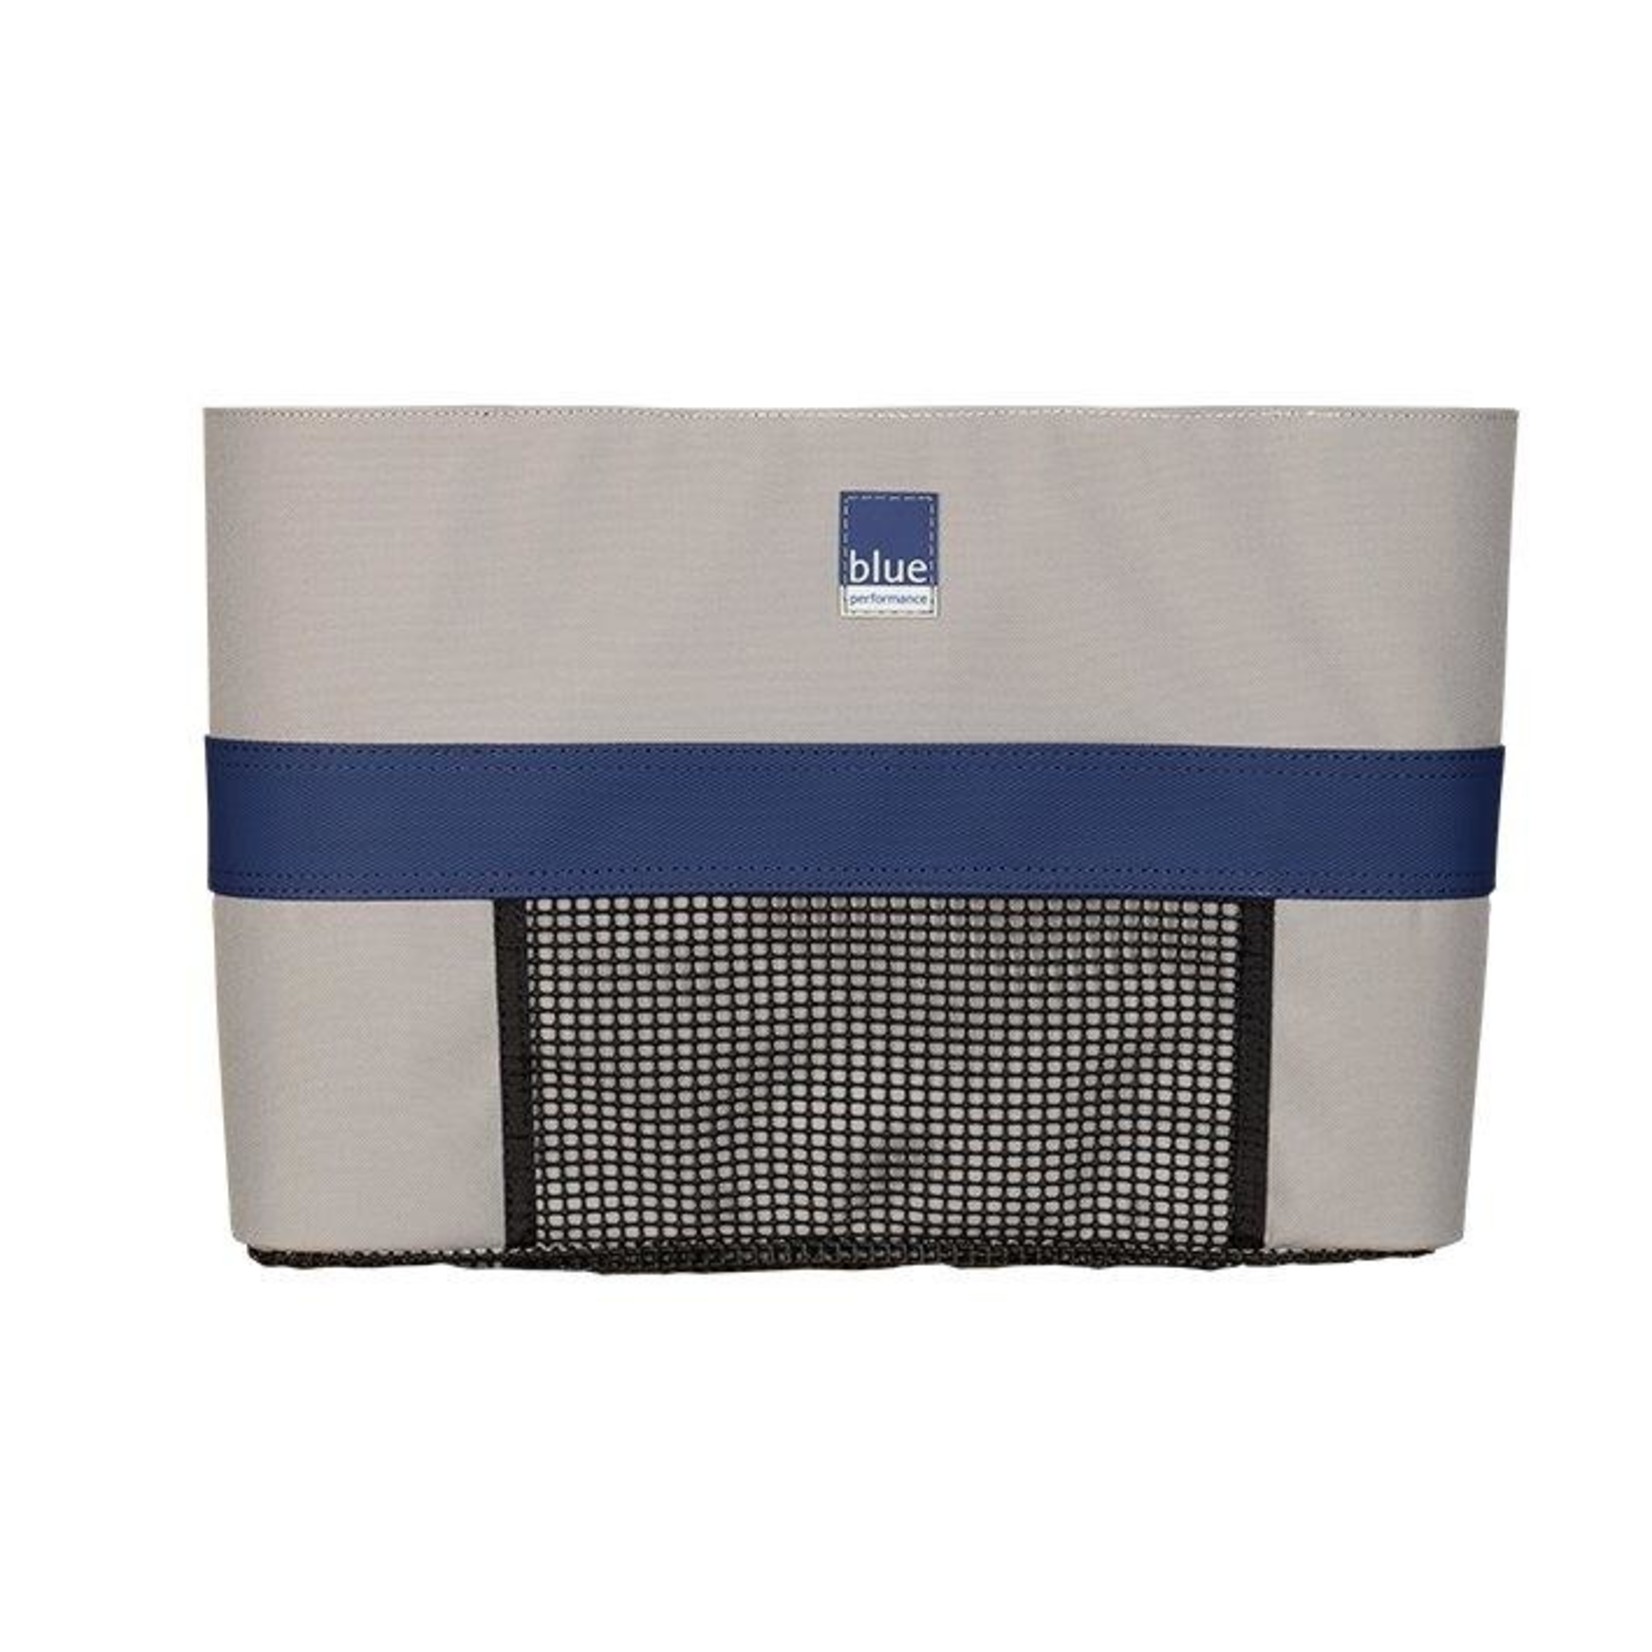 Blue Performance Skott Sheet Combi Bag Medium 38.5 x 27.5 x 10 cm